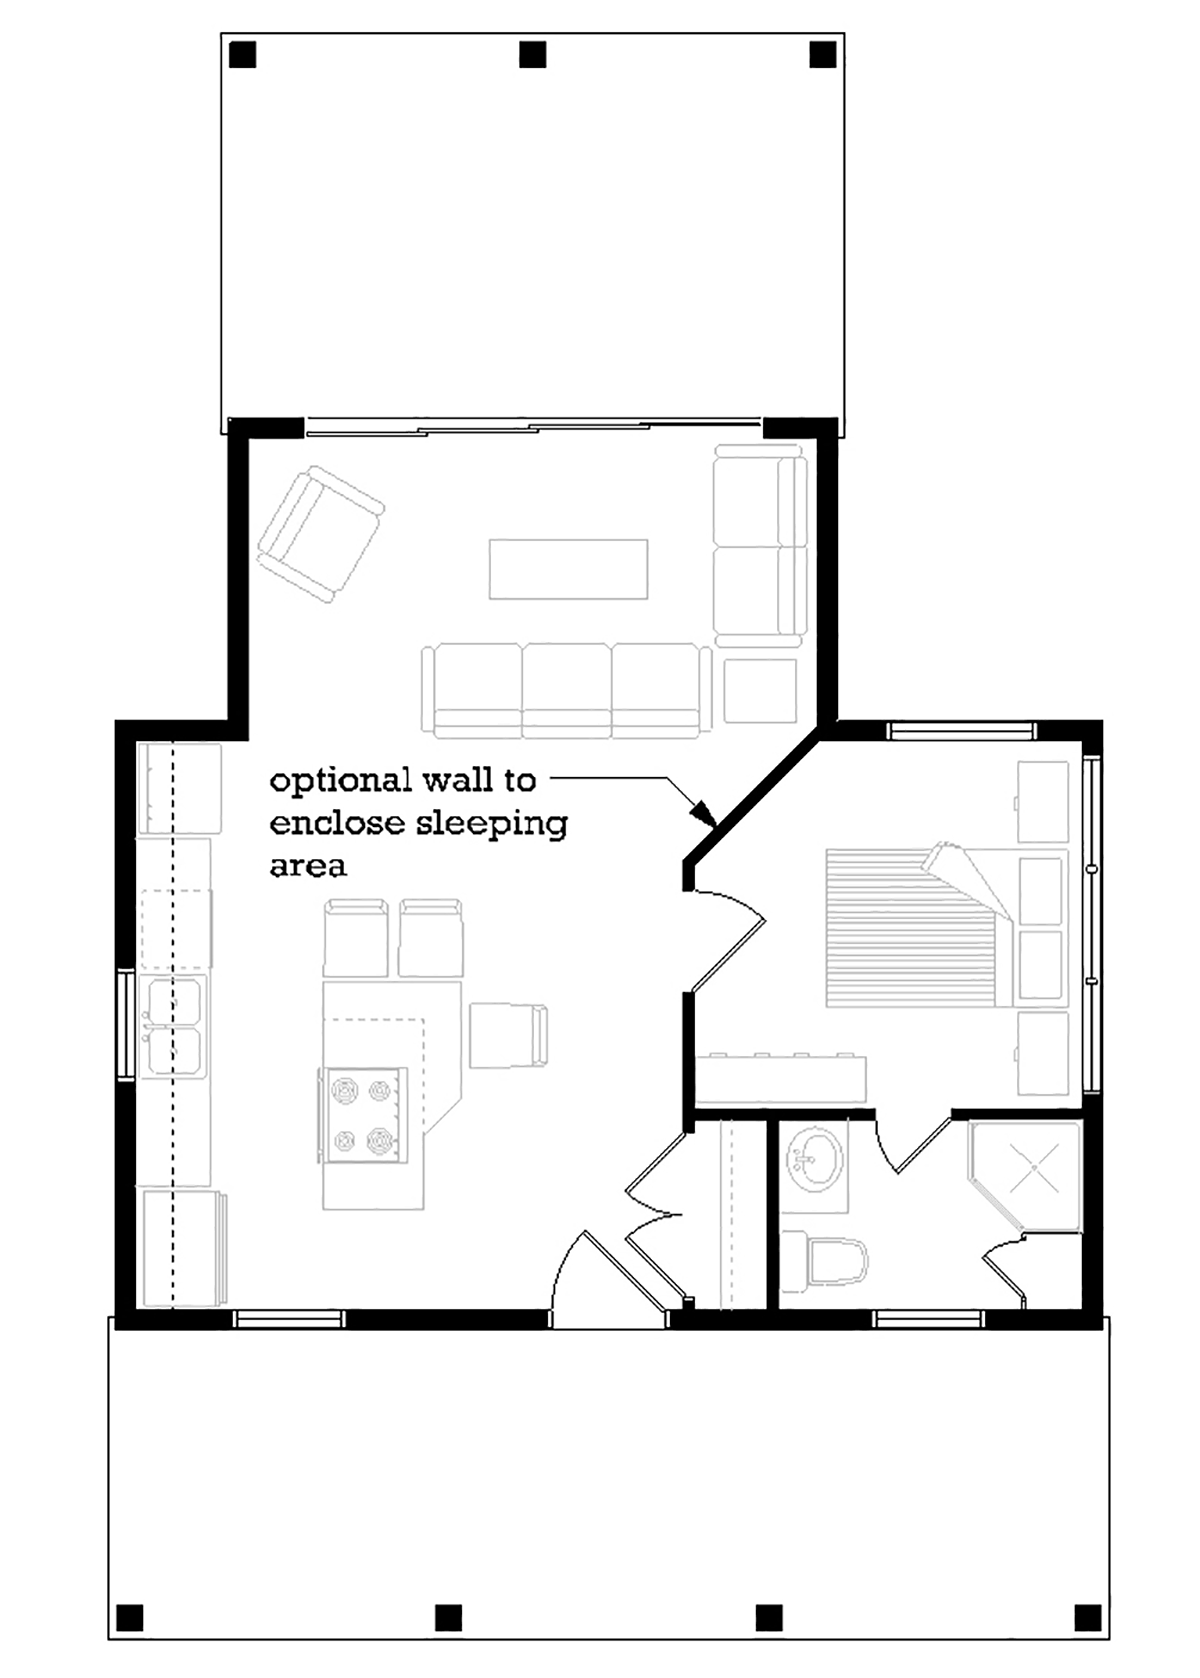 House Plan 76952 Alternate Level One